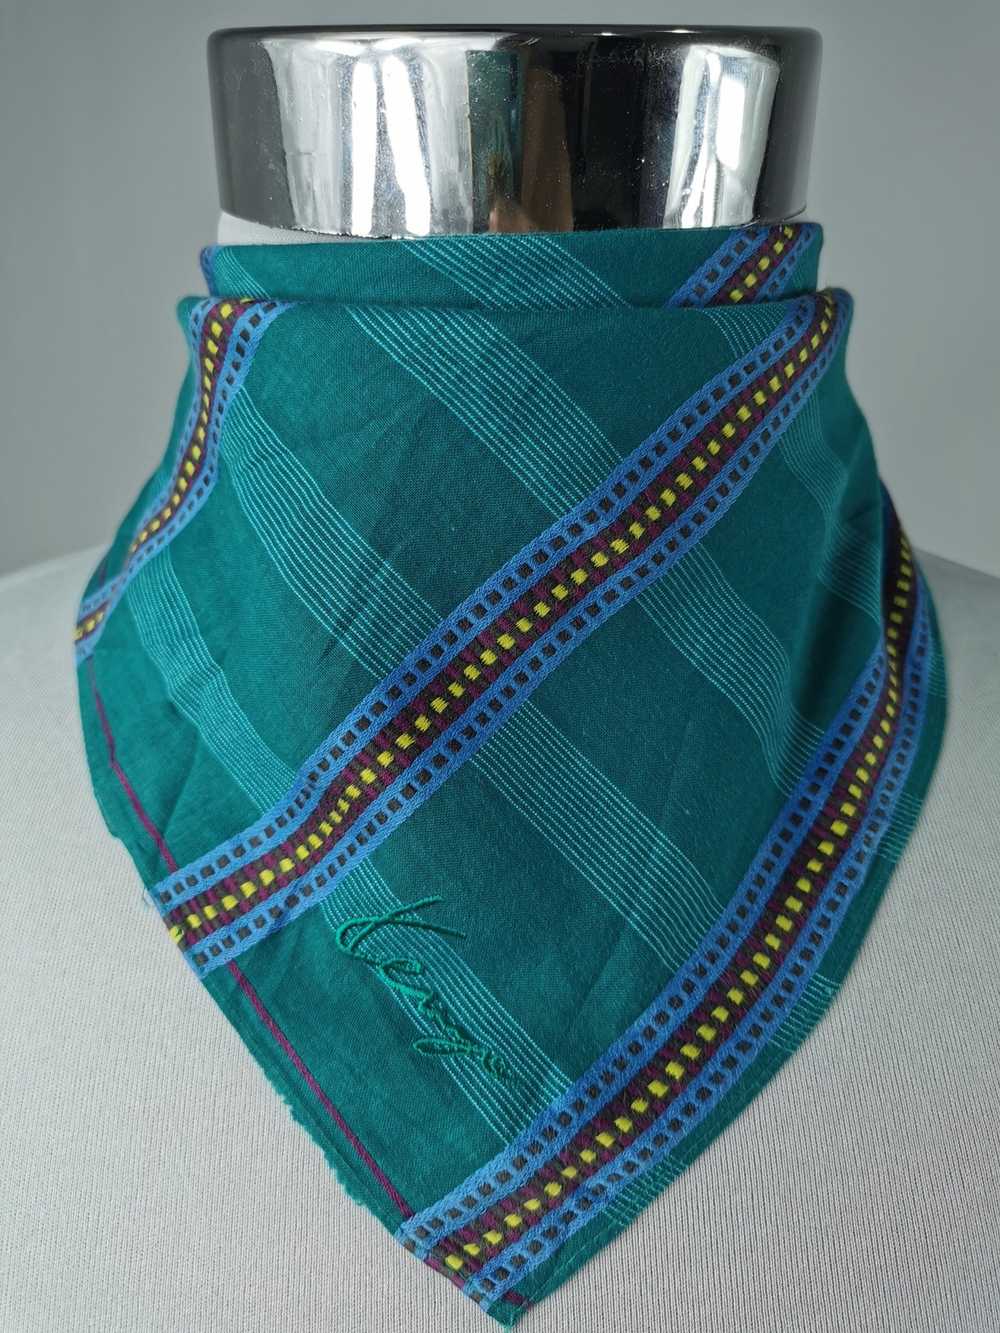 Kenzo Kenzo handkerchief bandana neckerchief - image 1